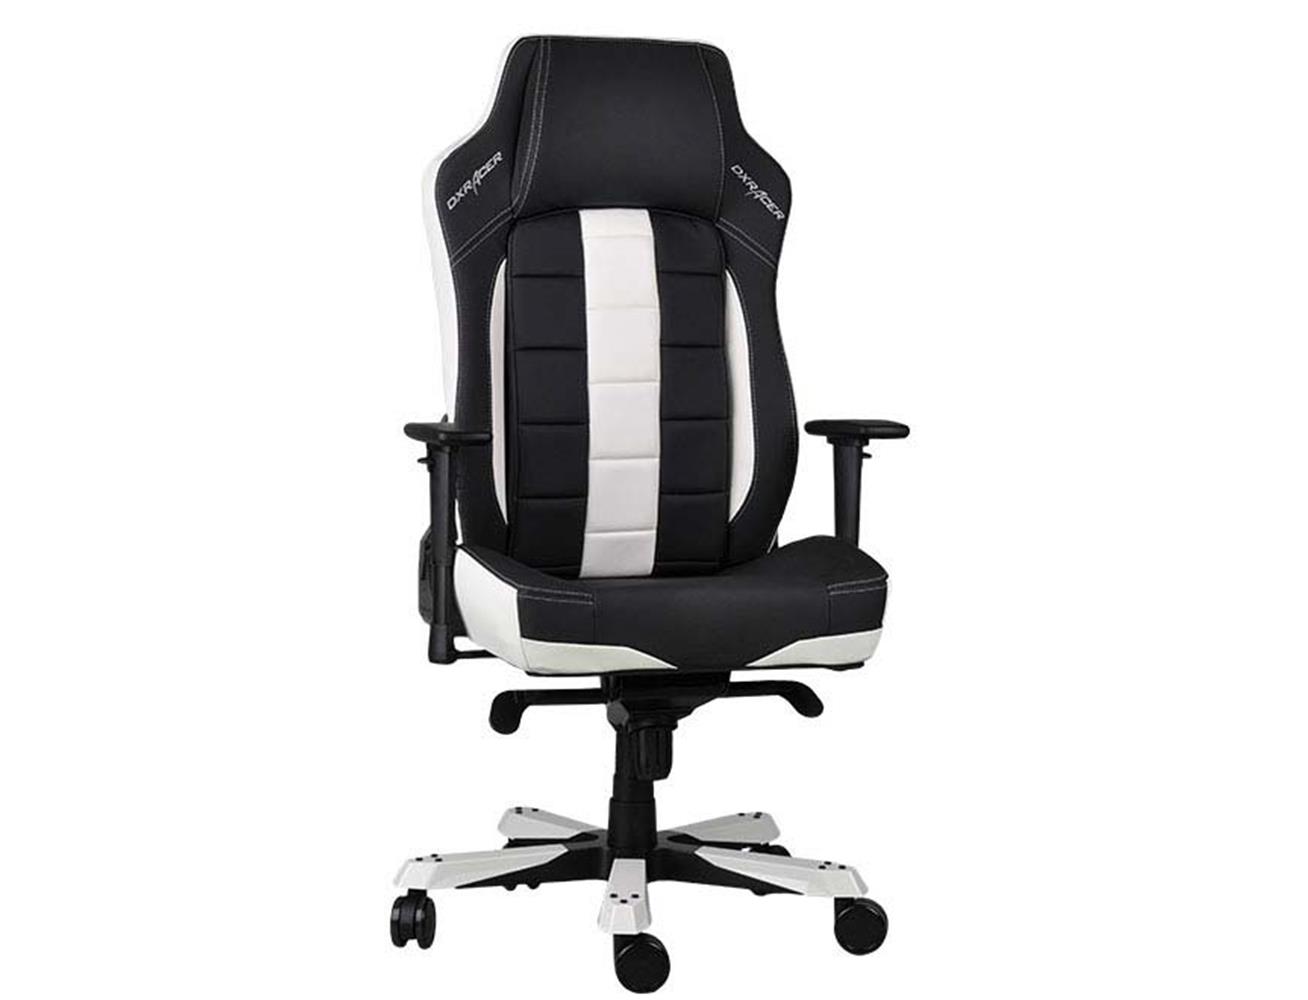  DXRacer  Classic Series Gaming  Chair  Black  White  Blink Kuwait